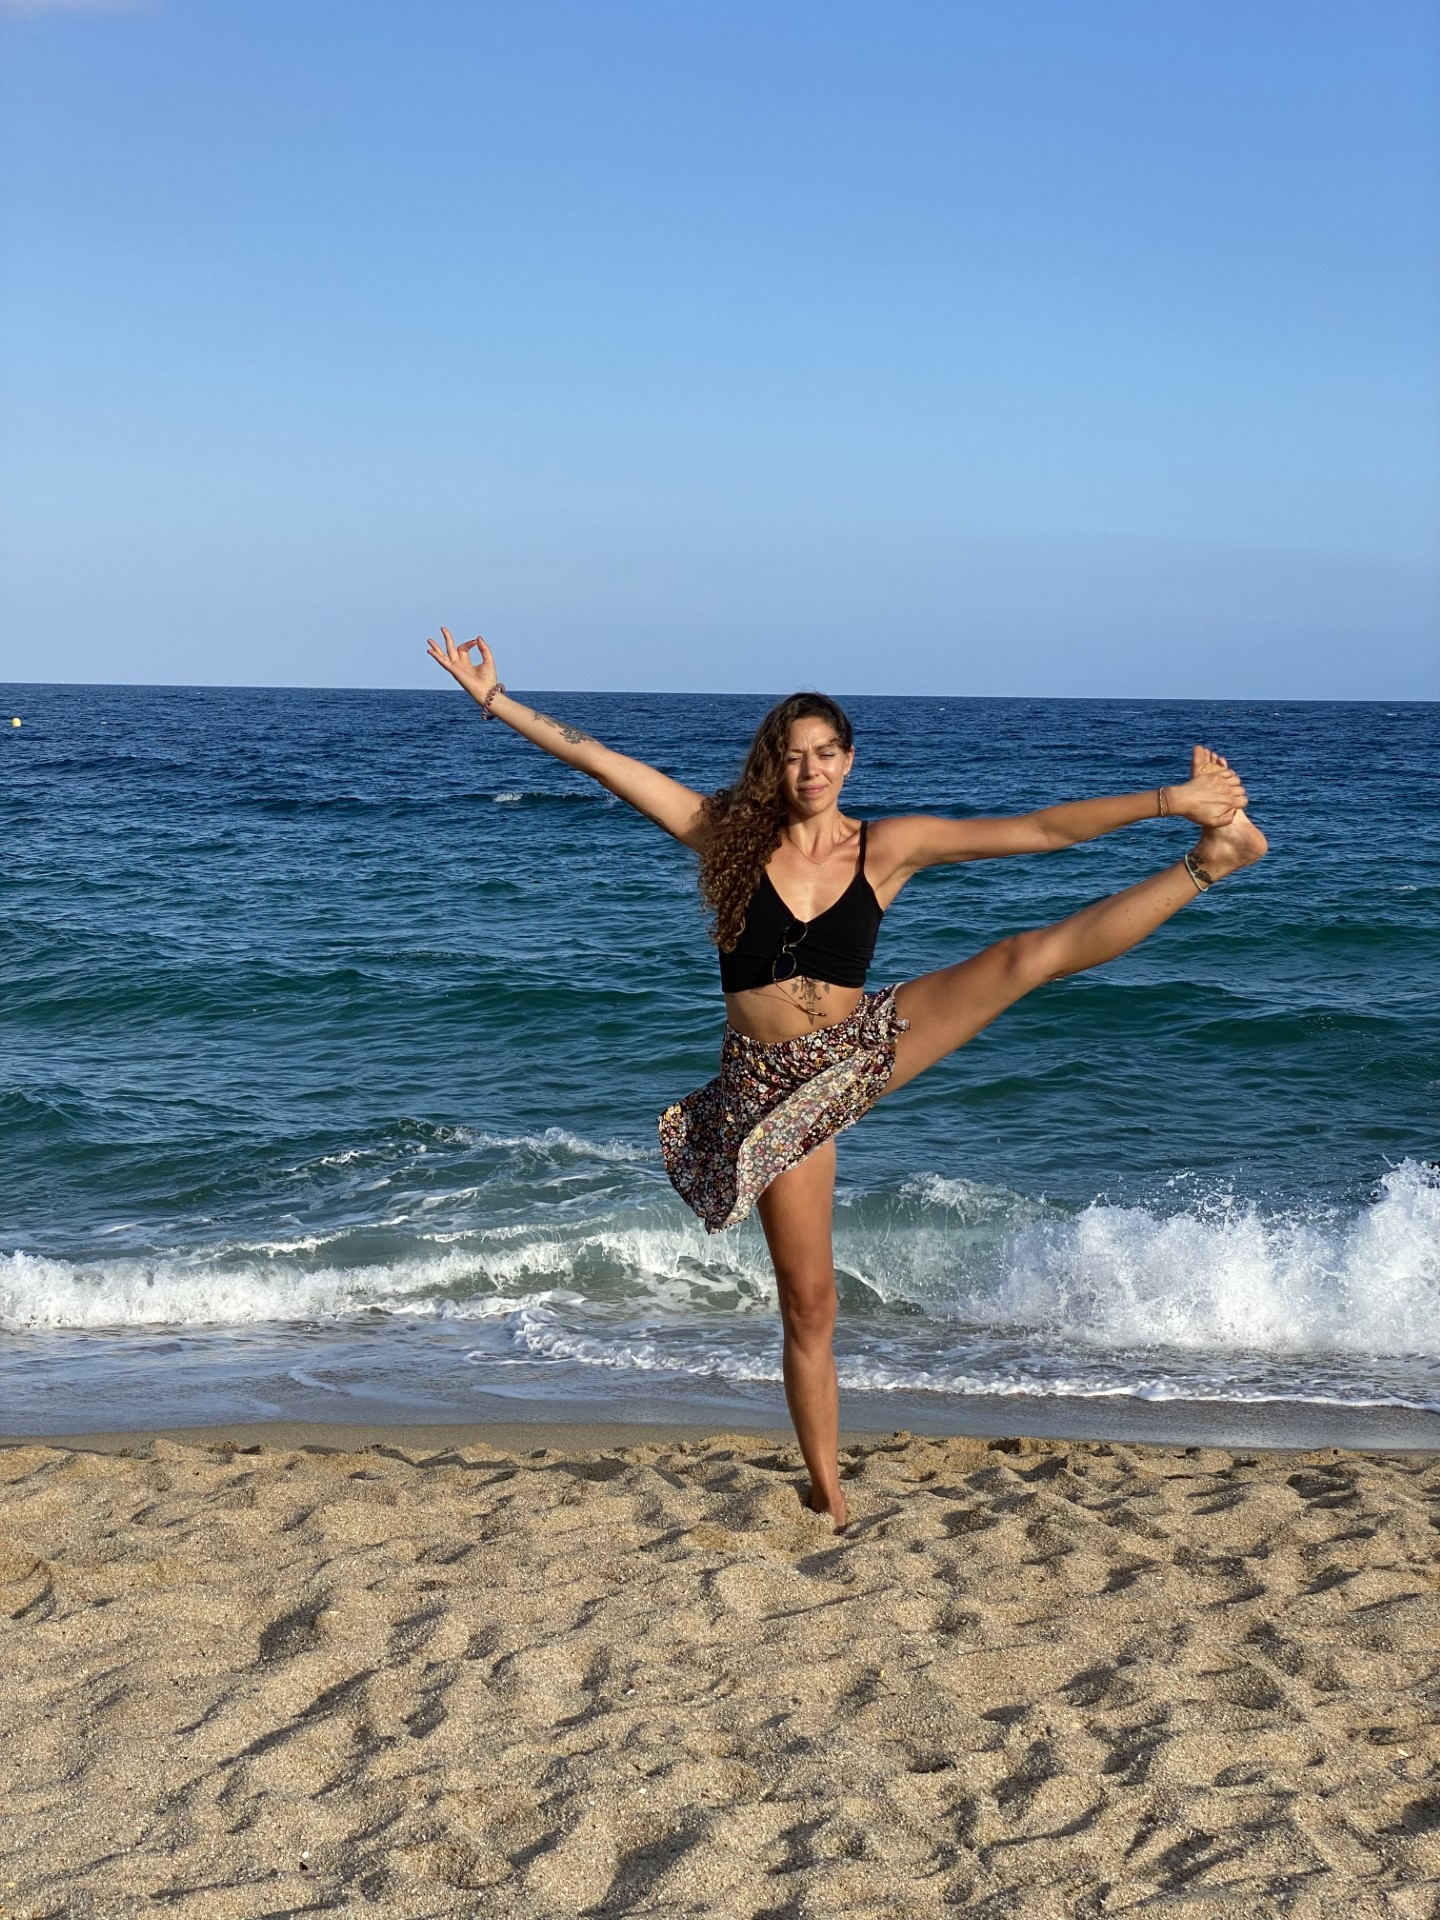 Ceci doing yoga posture on the beach